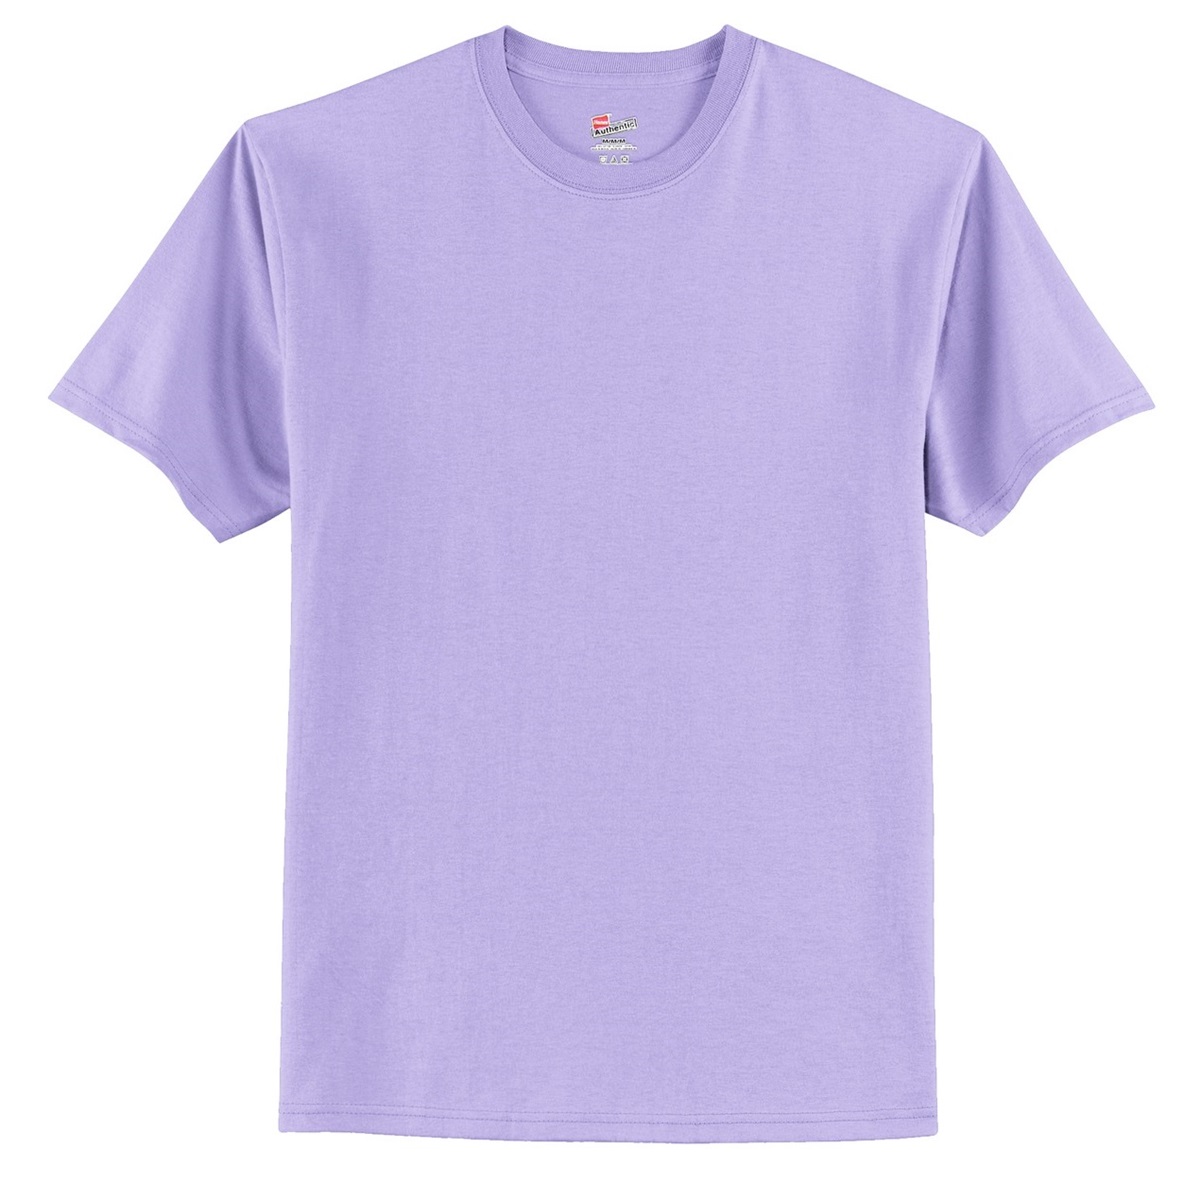 Lavender Shirt Template